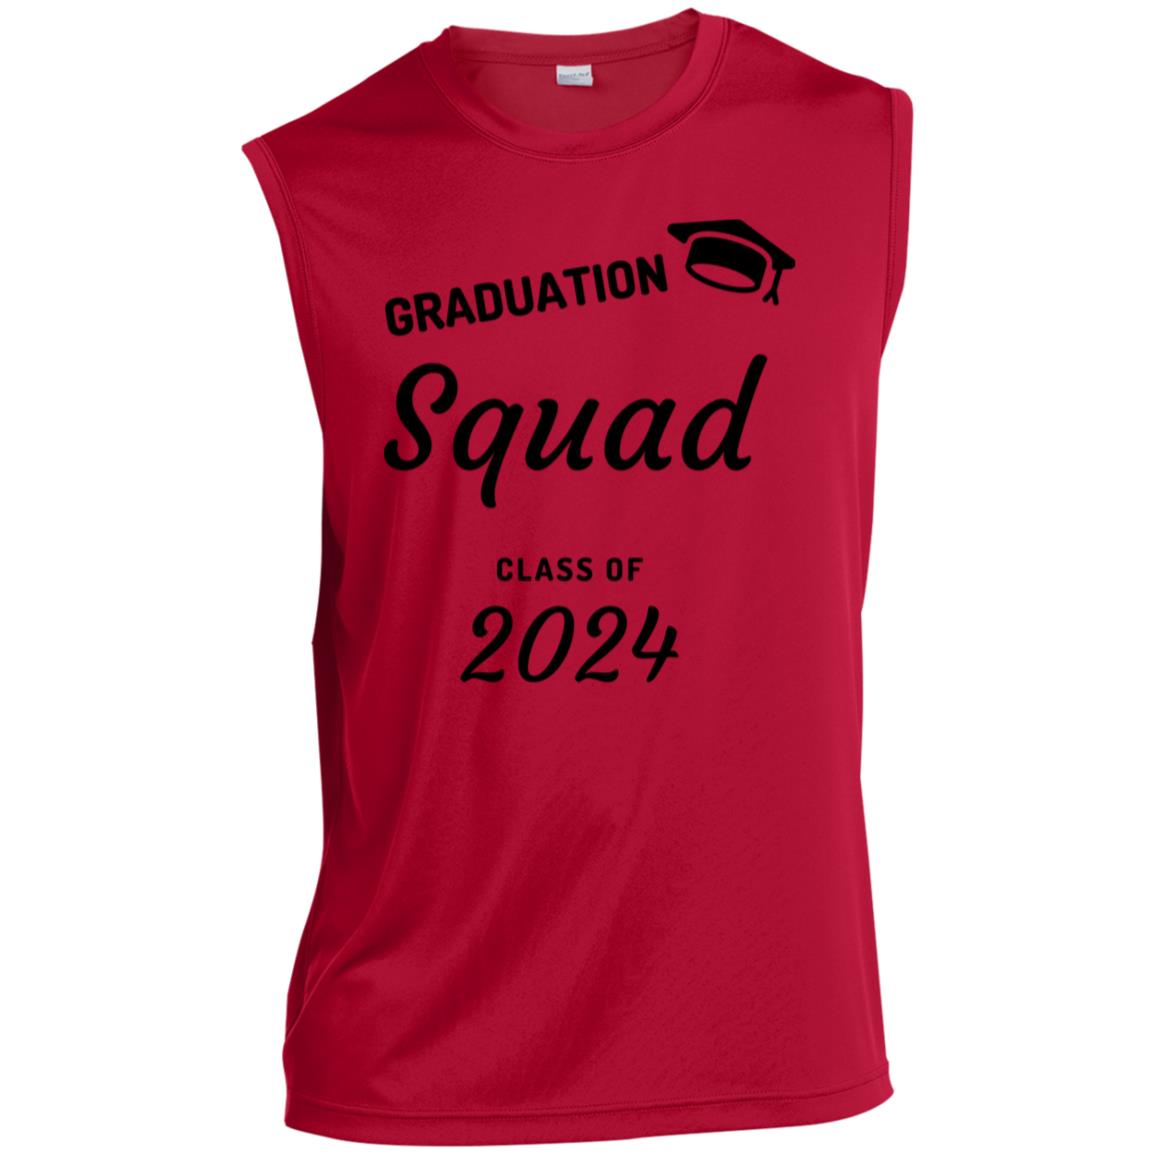 Grad Squad 2024 -- Men’s Sleeveless Performance Tee